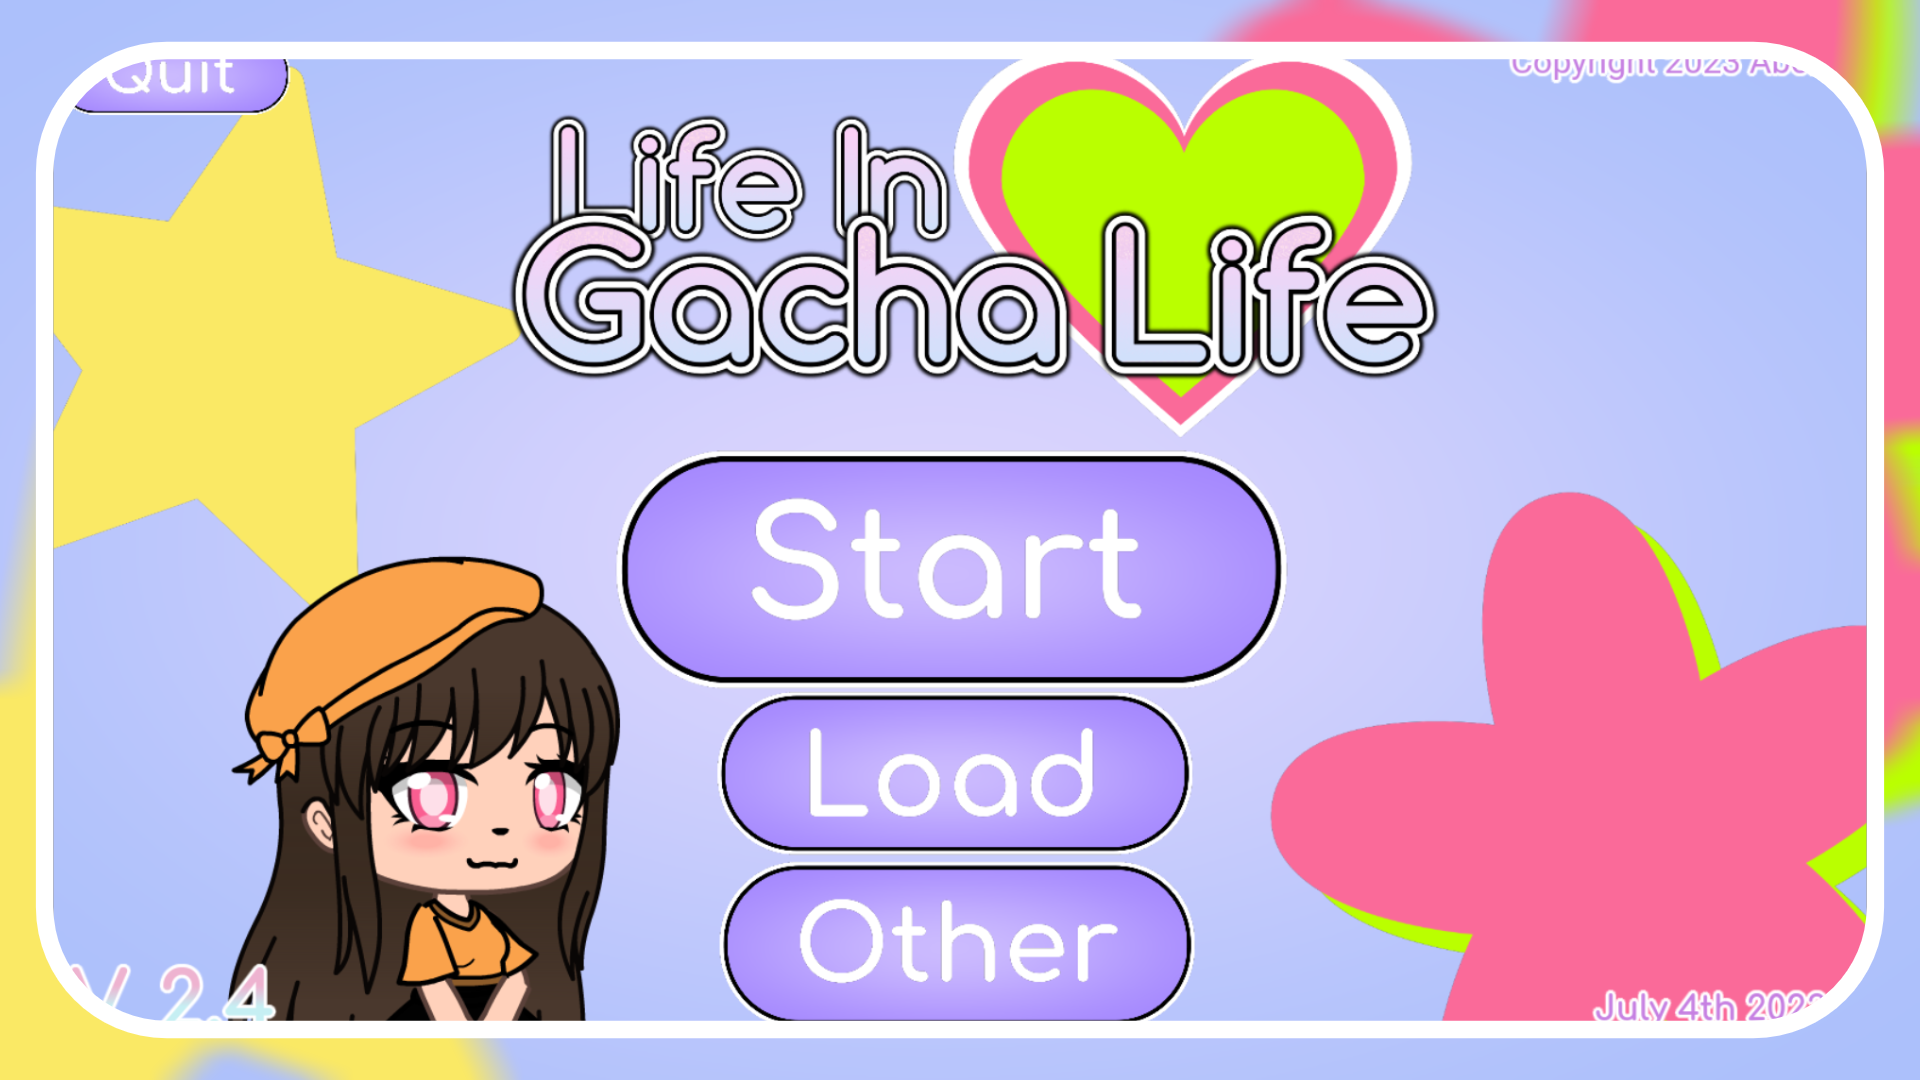 How to Download Gacha Life 2 Mod Apk Mods Inside Version